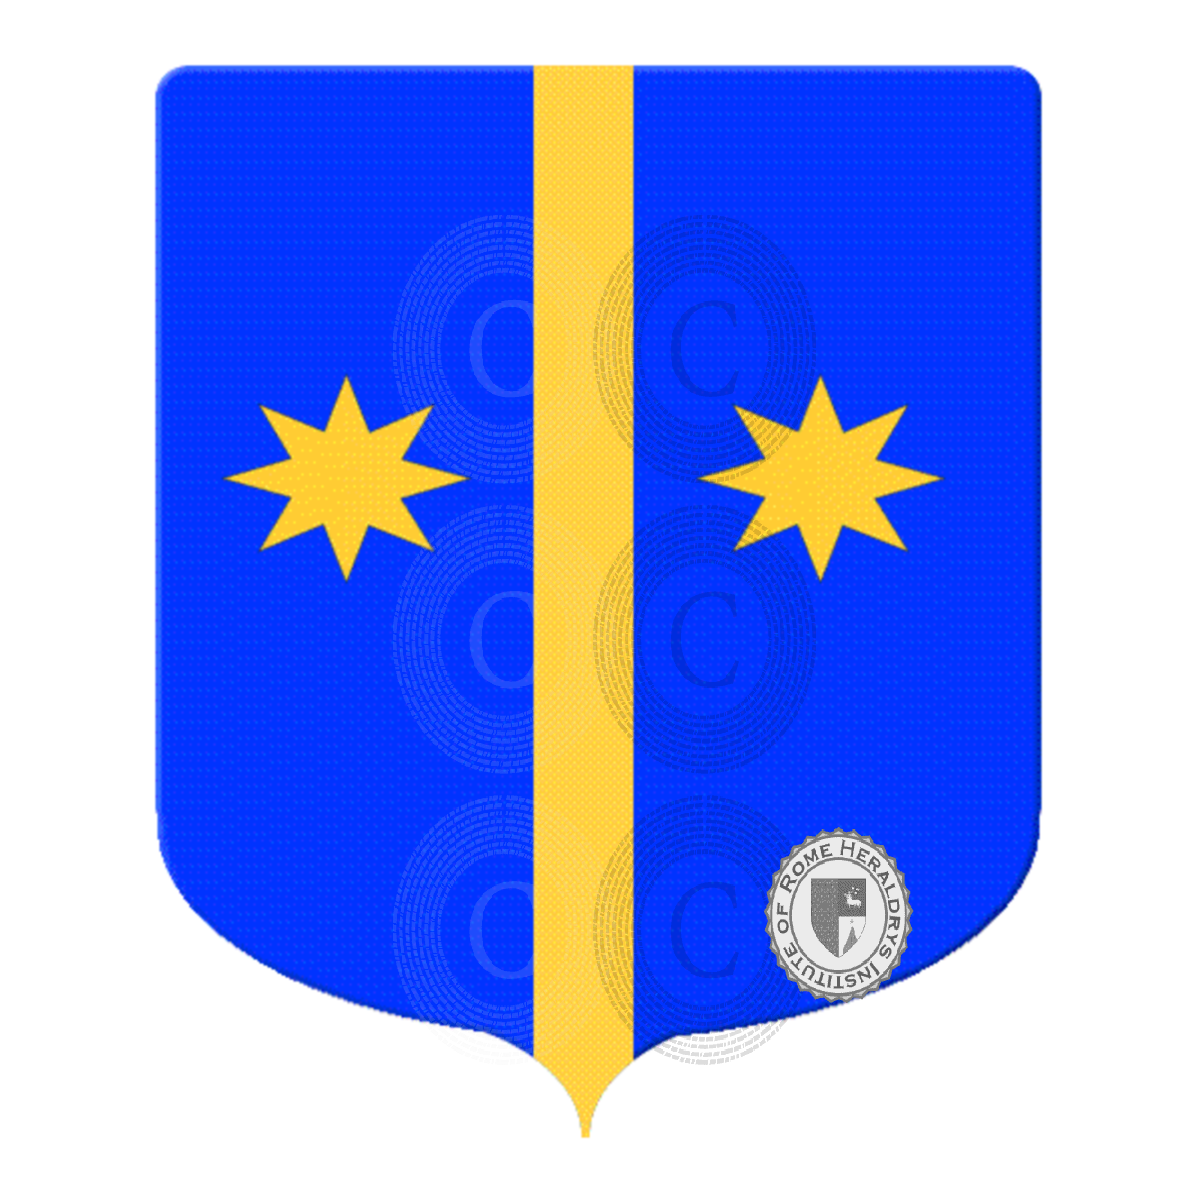 Wappen der FamiliePeracchio